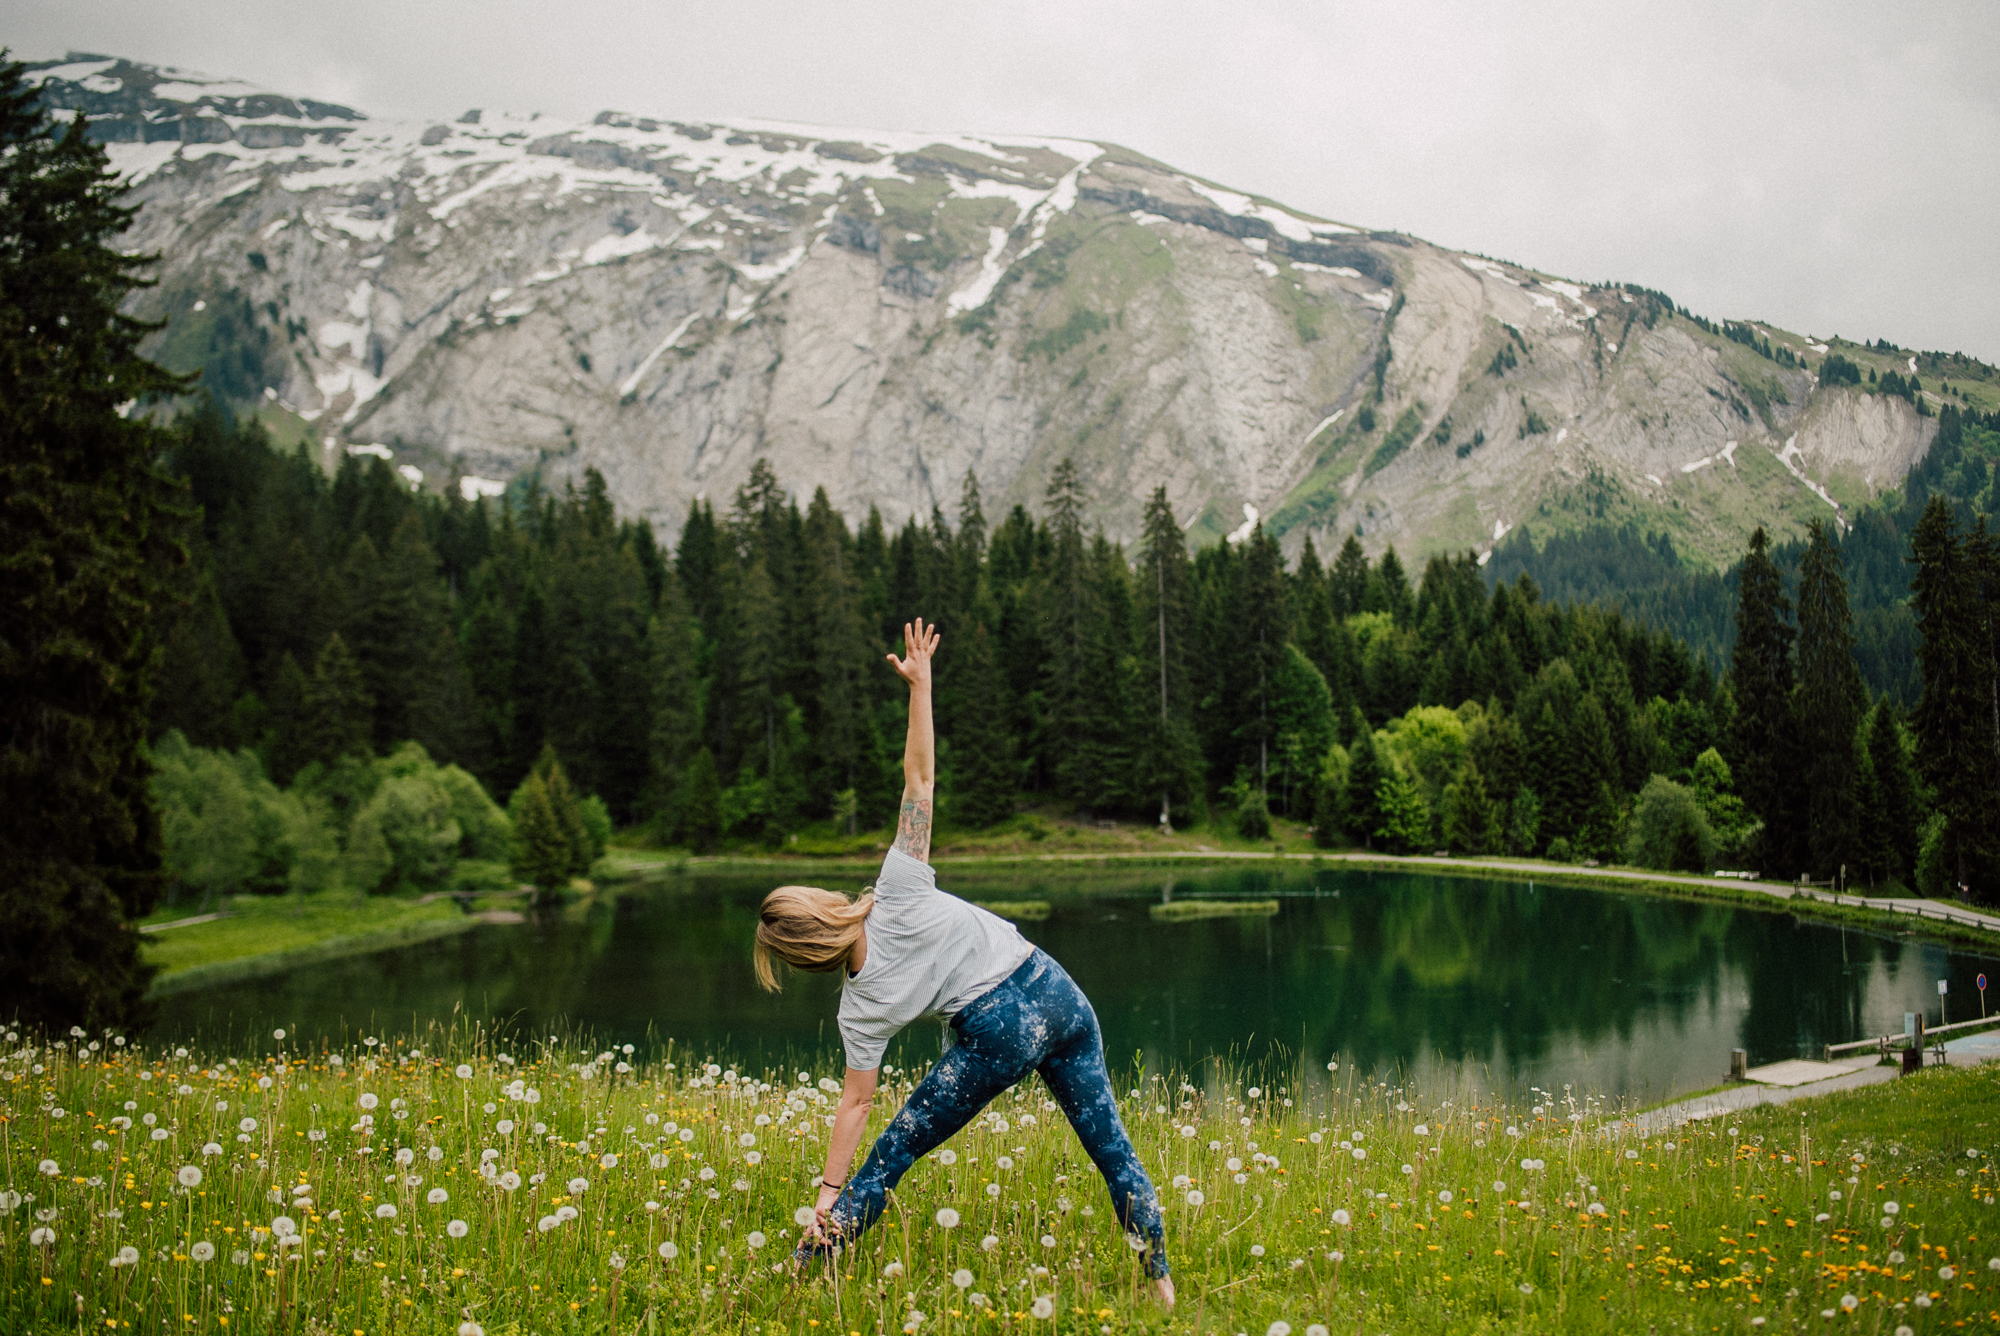 Yoga retreat in the Alps